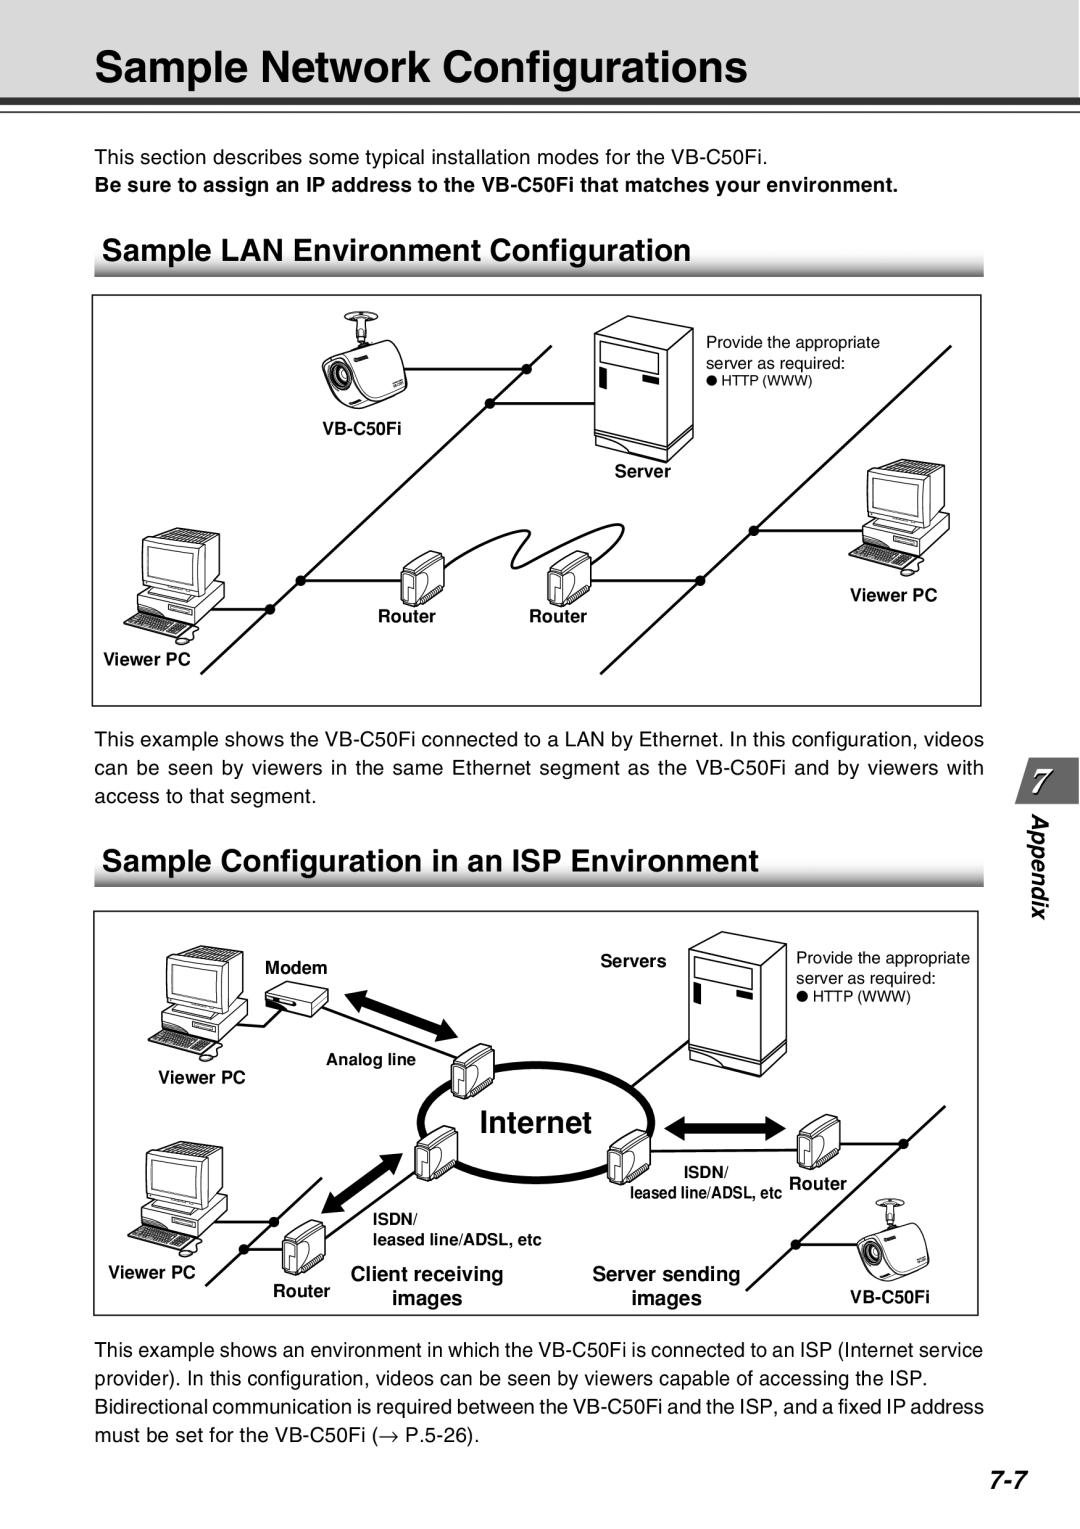 Canon Vb-C50fi Sample Network Configurations, Sample LAN Environment Configuration, Internet, Server sending, images 